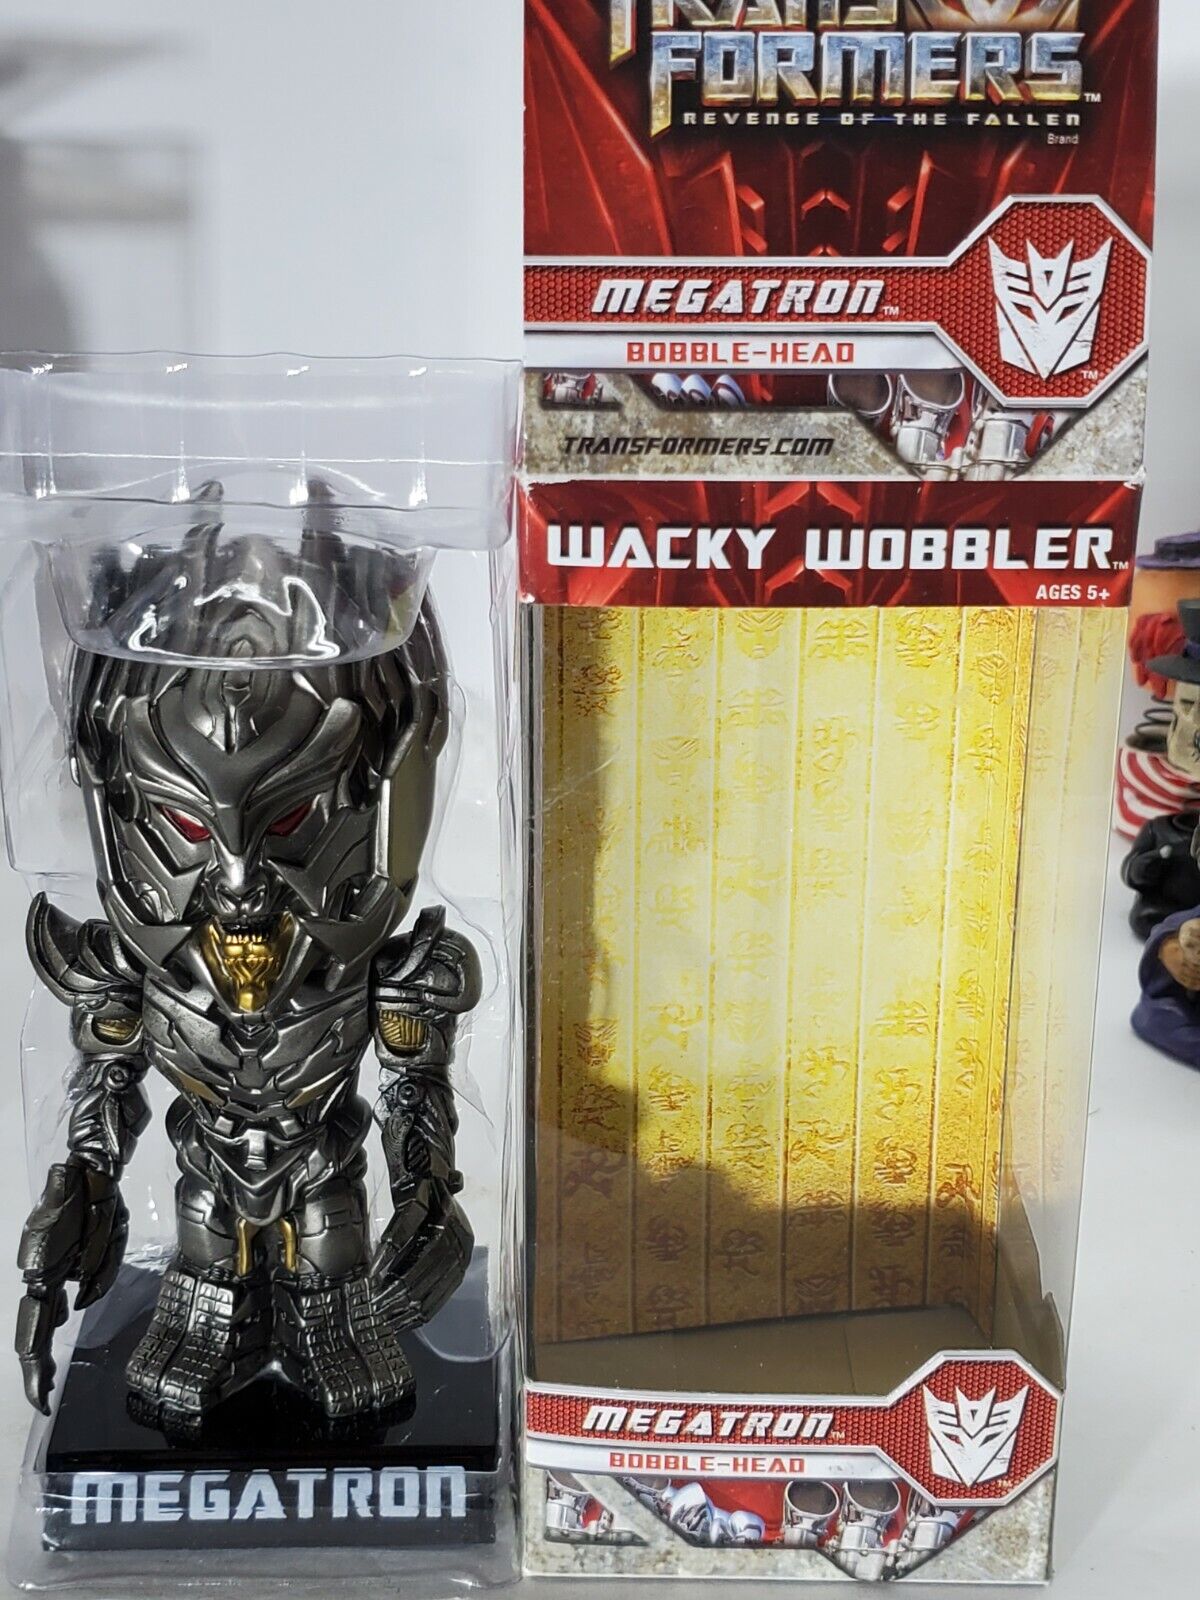 2009 Transformers Megatron Wacky Wobbler Collectible Bobblehead 